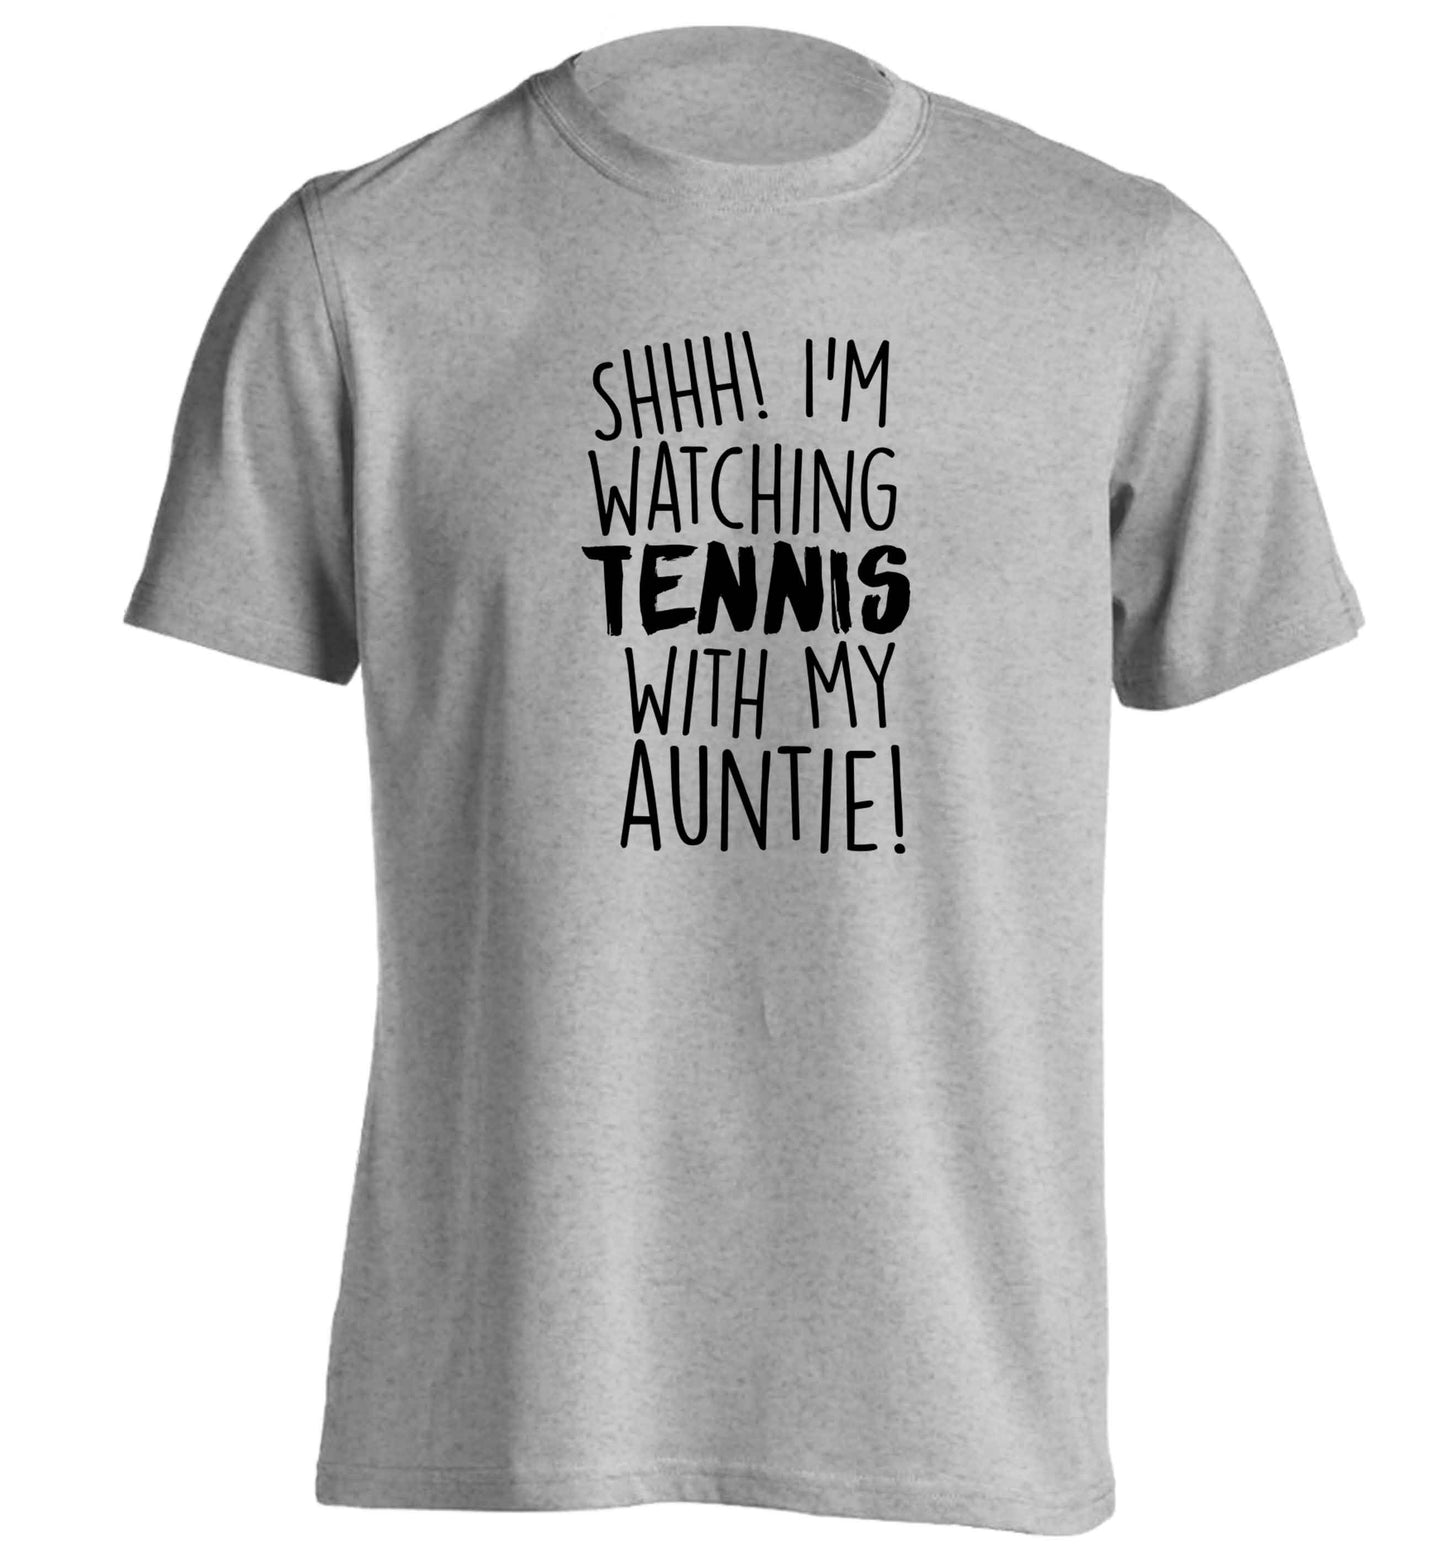 Shh! I'm watching tennis with my auntie! adults unisex grey Tshirt 2XL